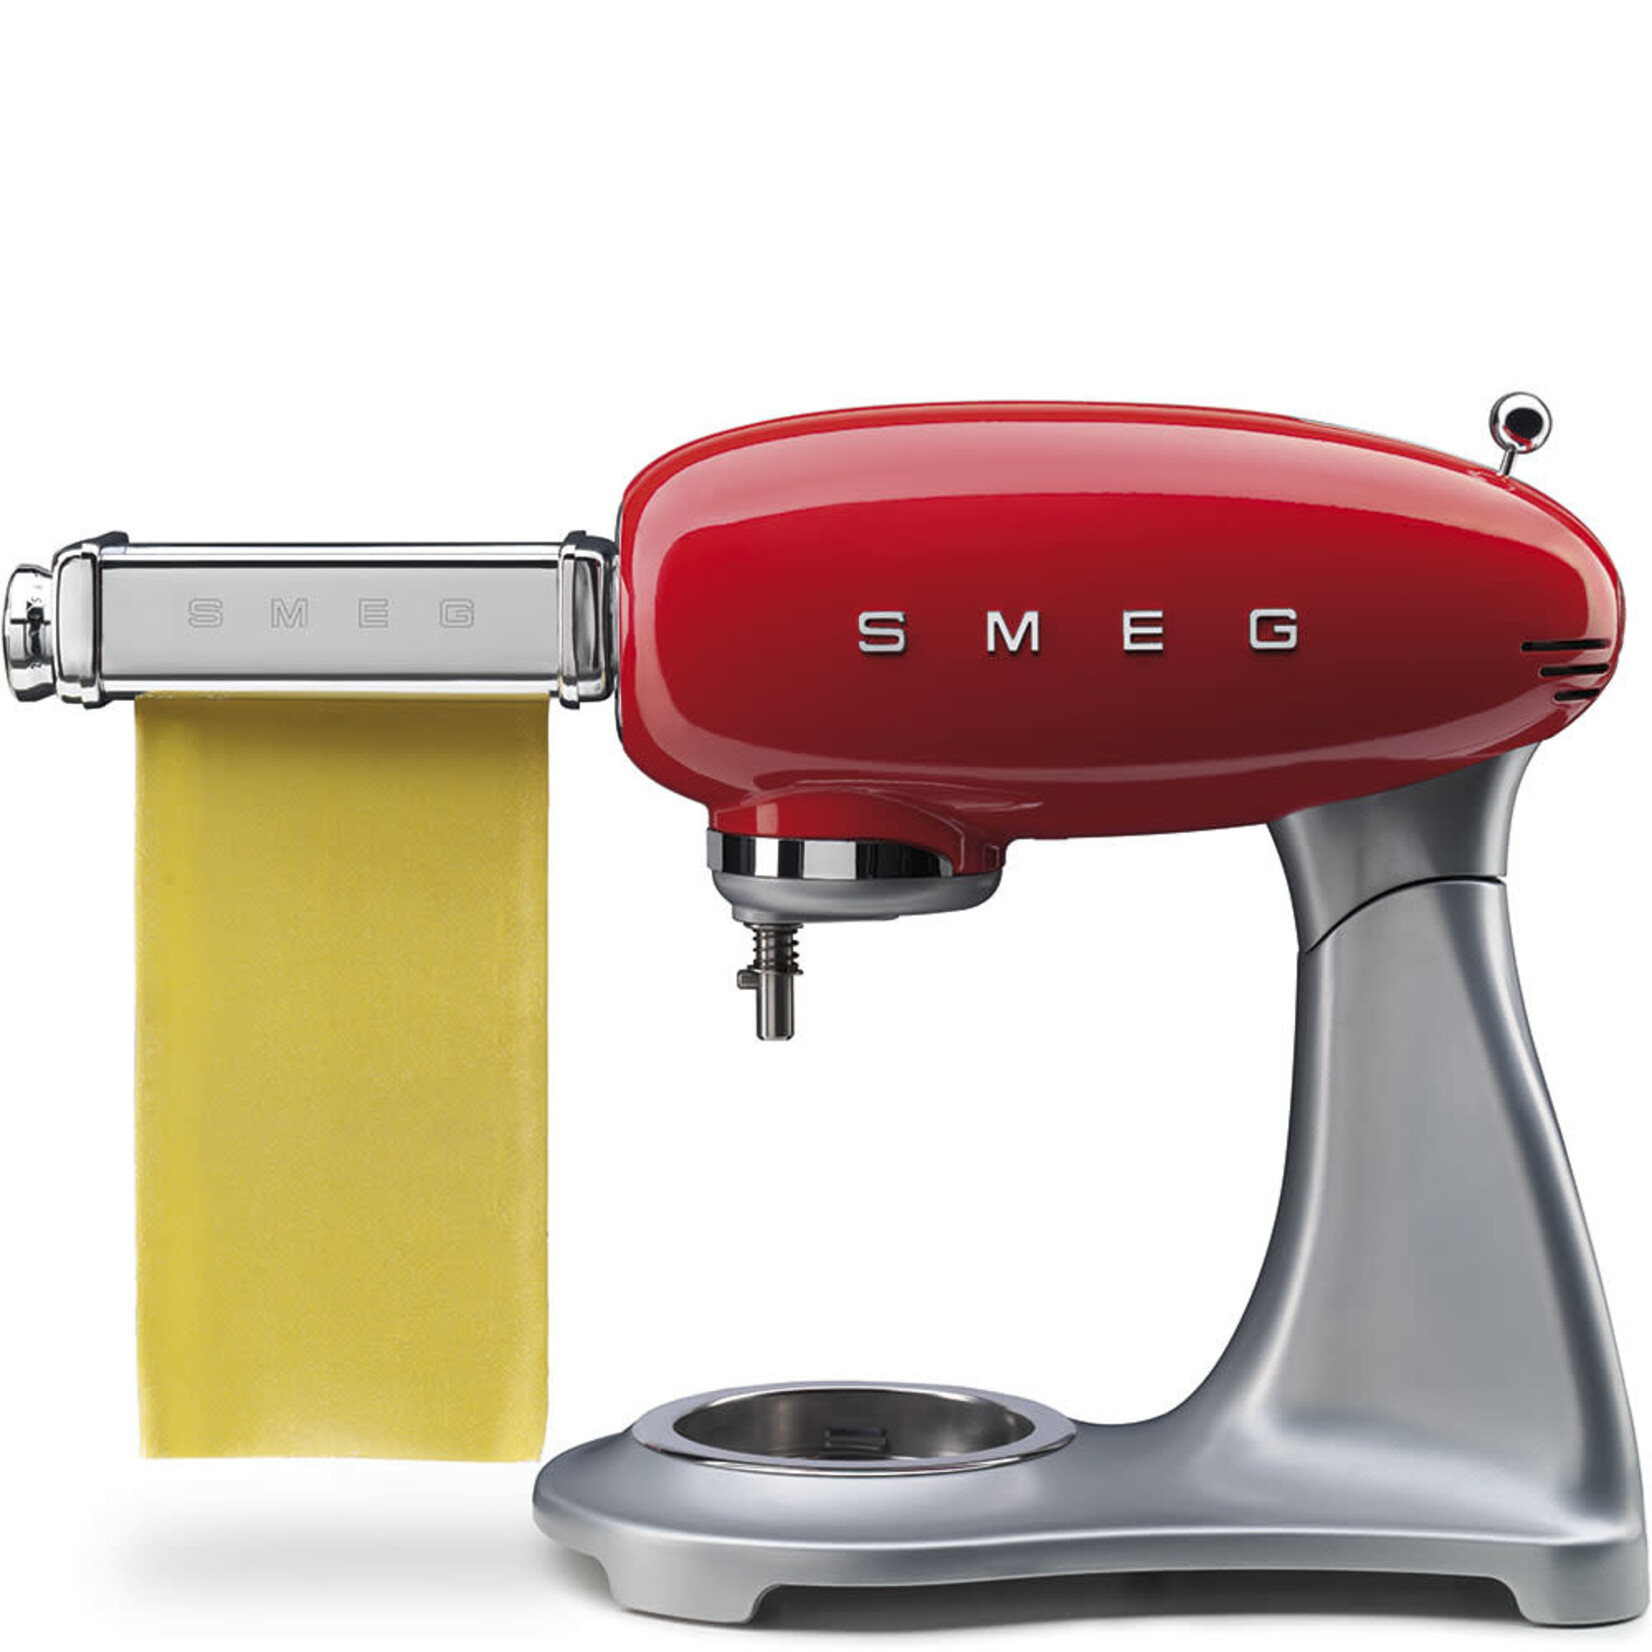 SMEG Smeg Stand Mixer Accessories - Pasta Roller